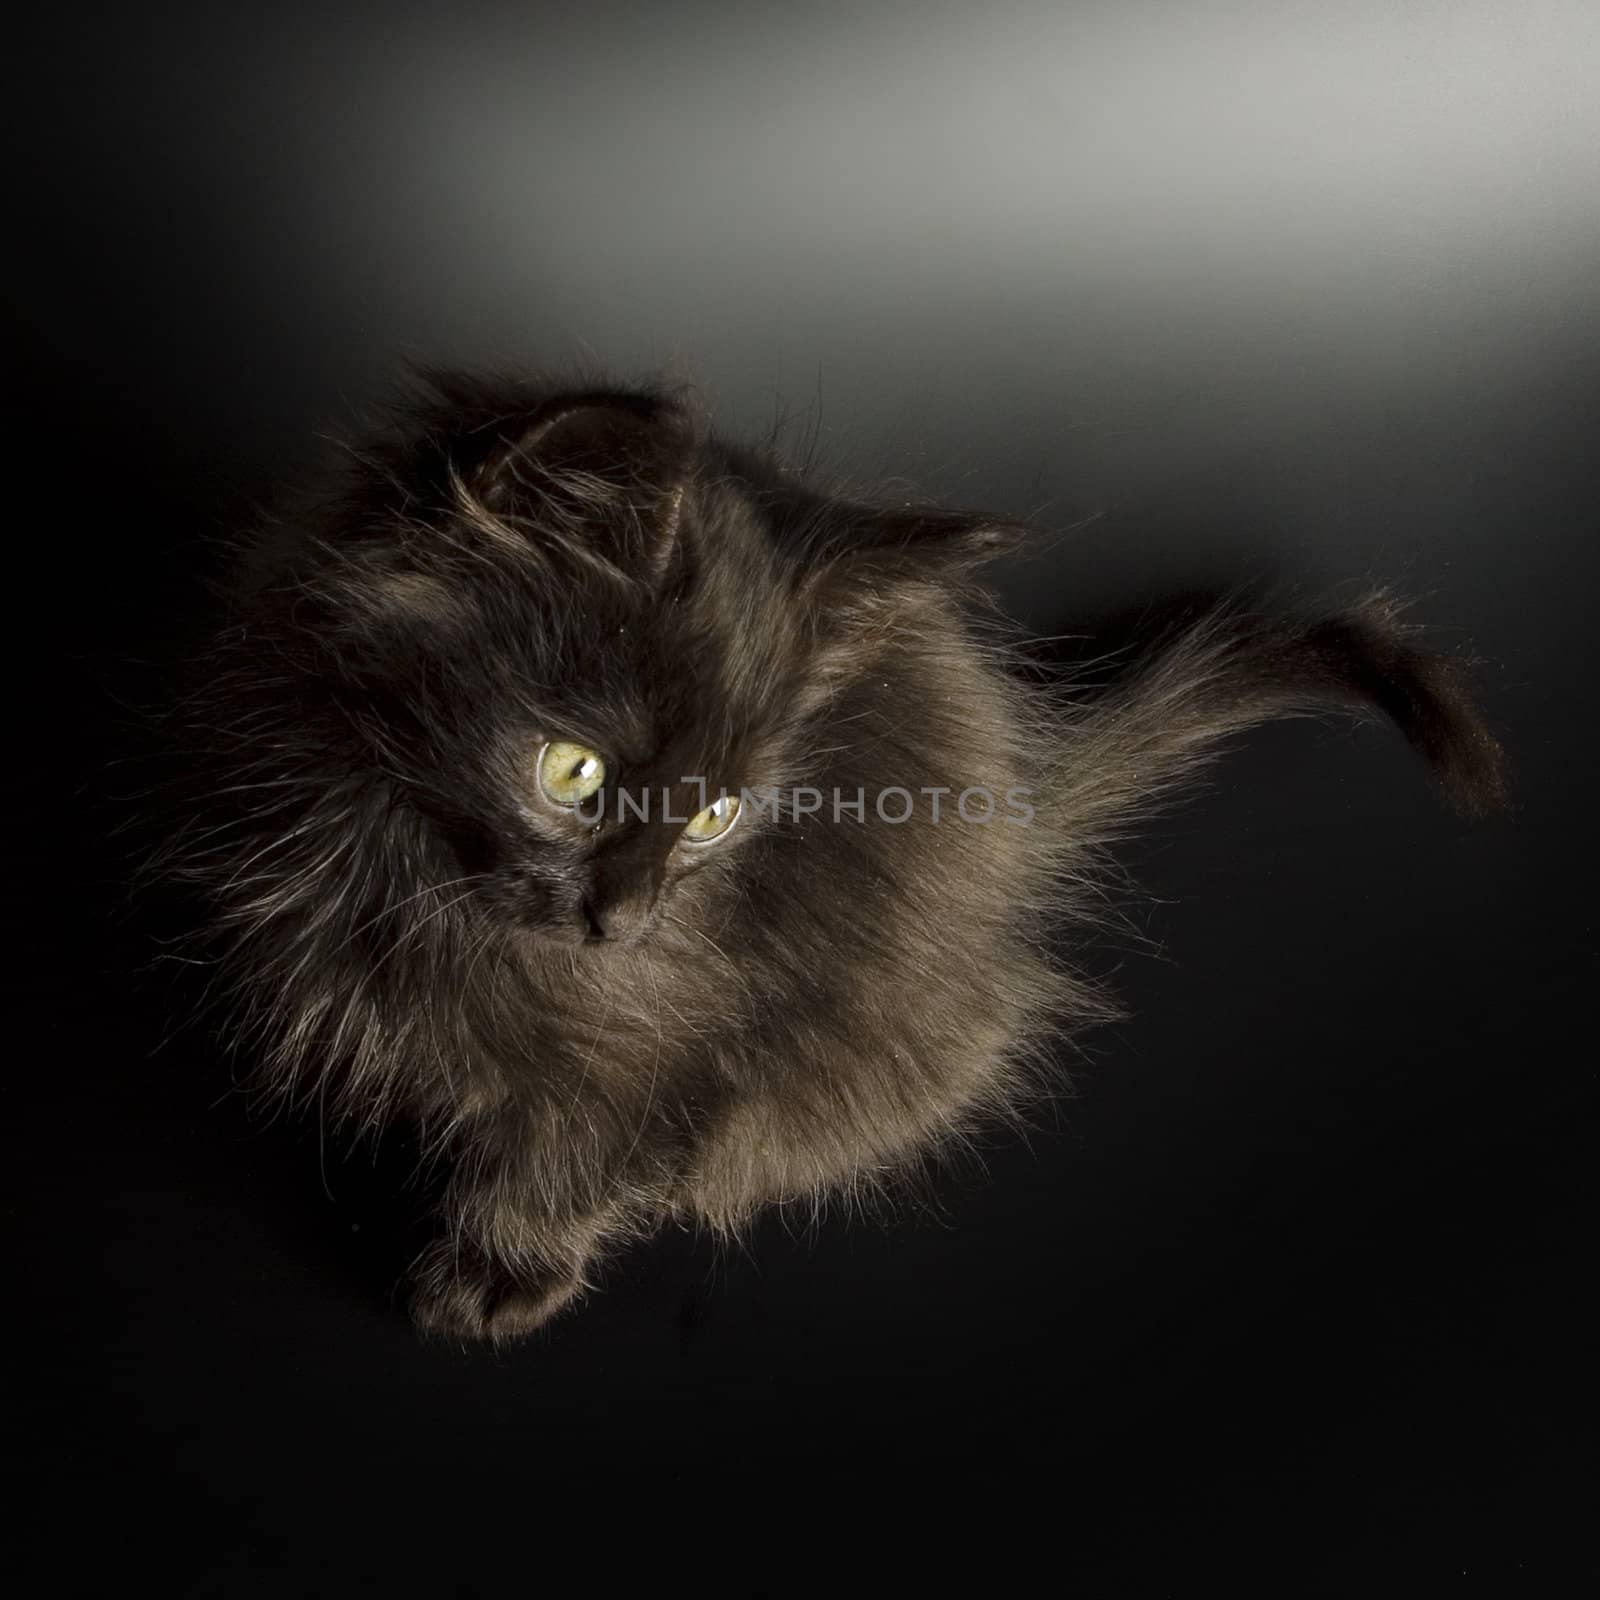 Cute black kitten on black background